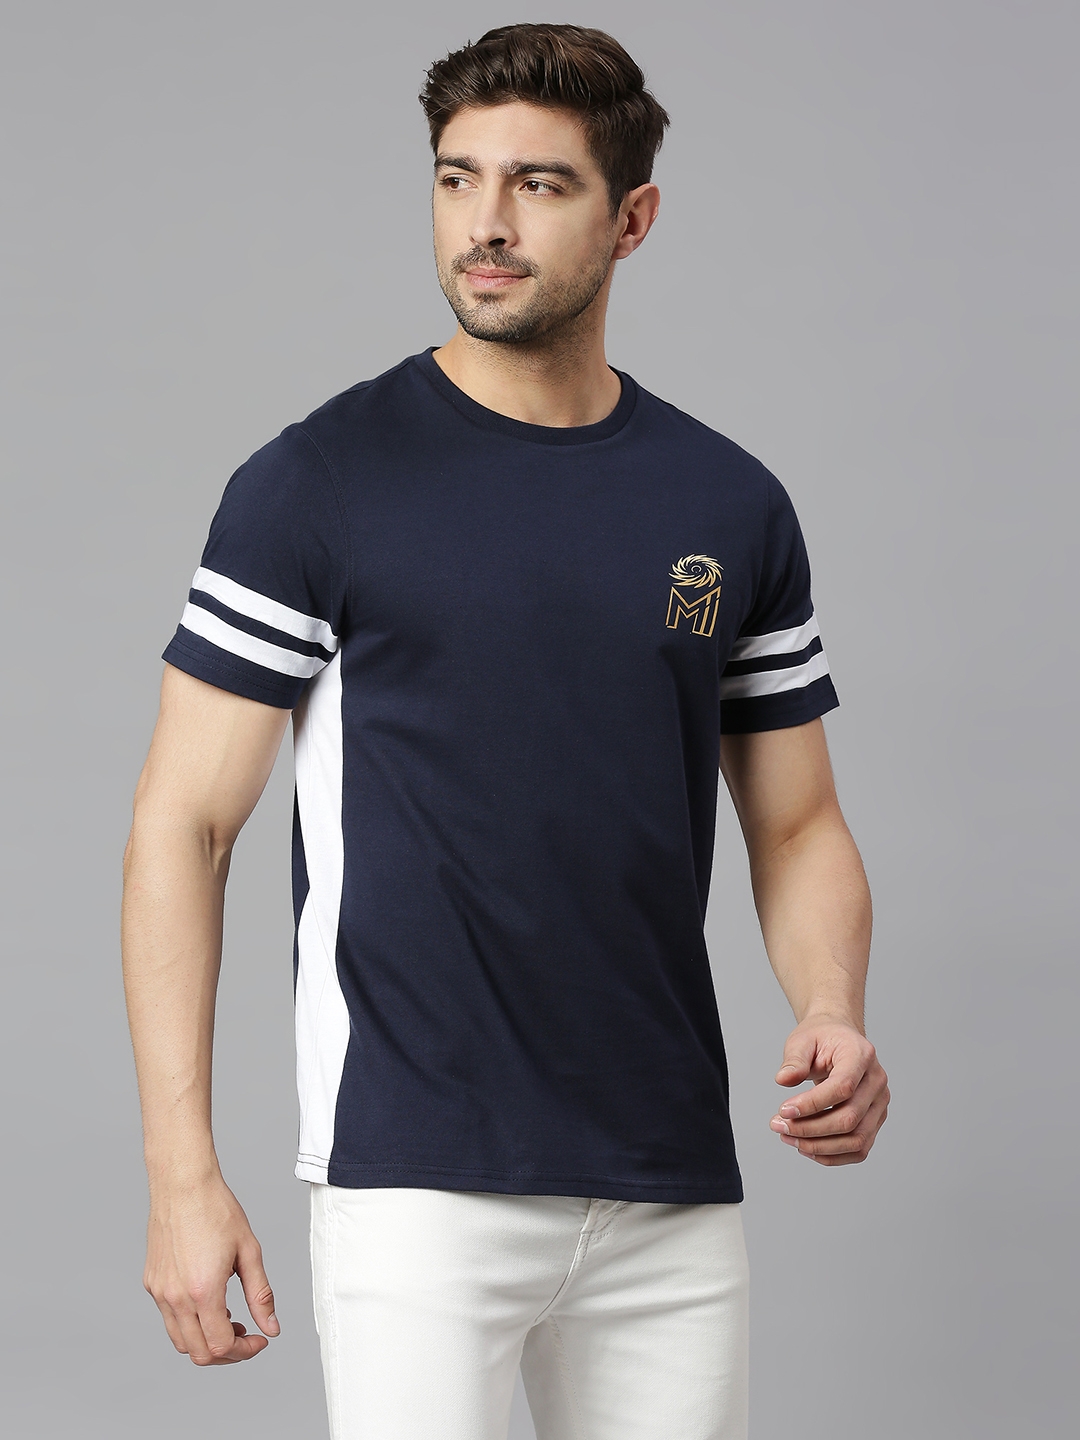 MI: Men Navy Blue Colourblocked Printed Round Neck T-Shirt